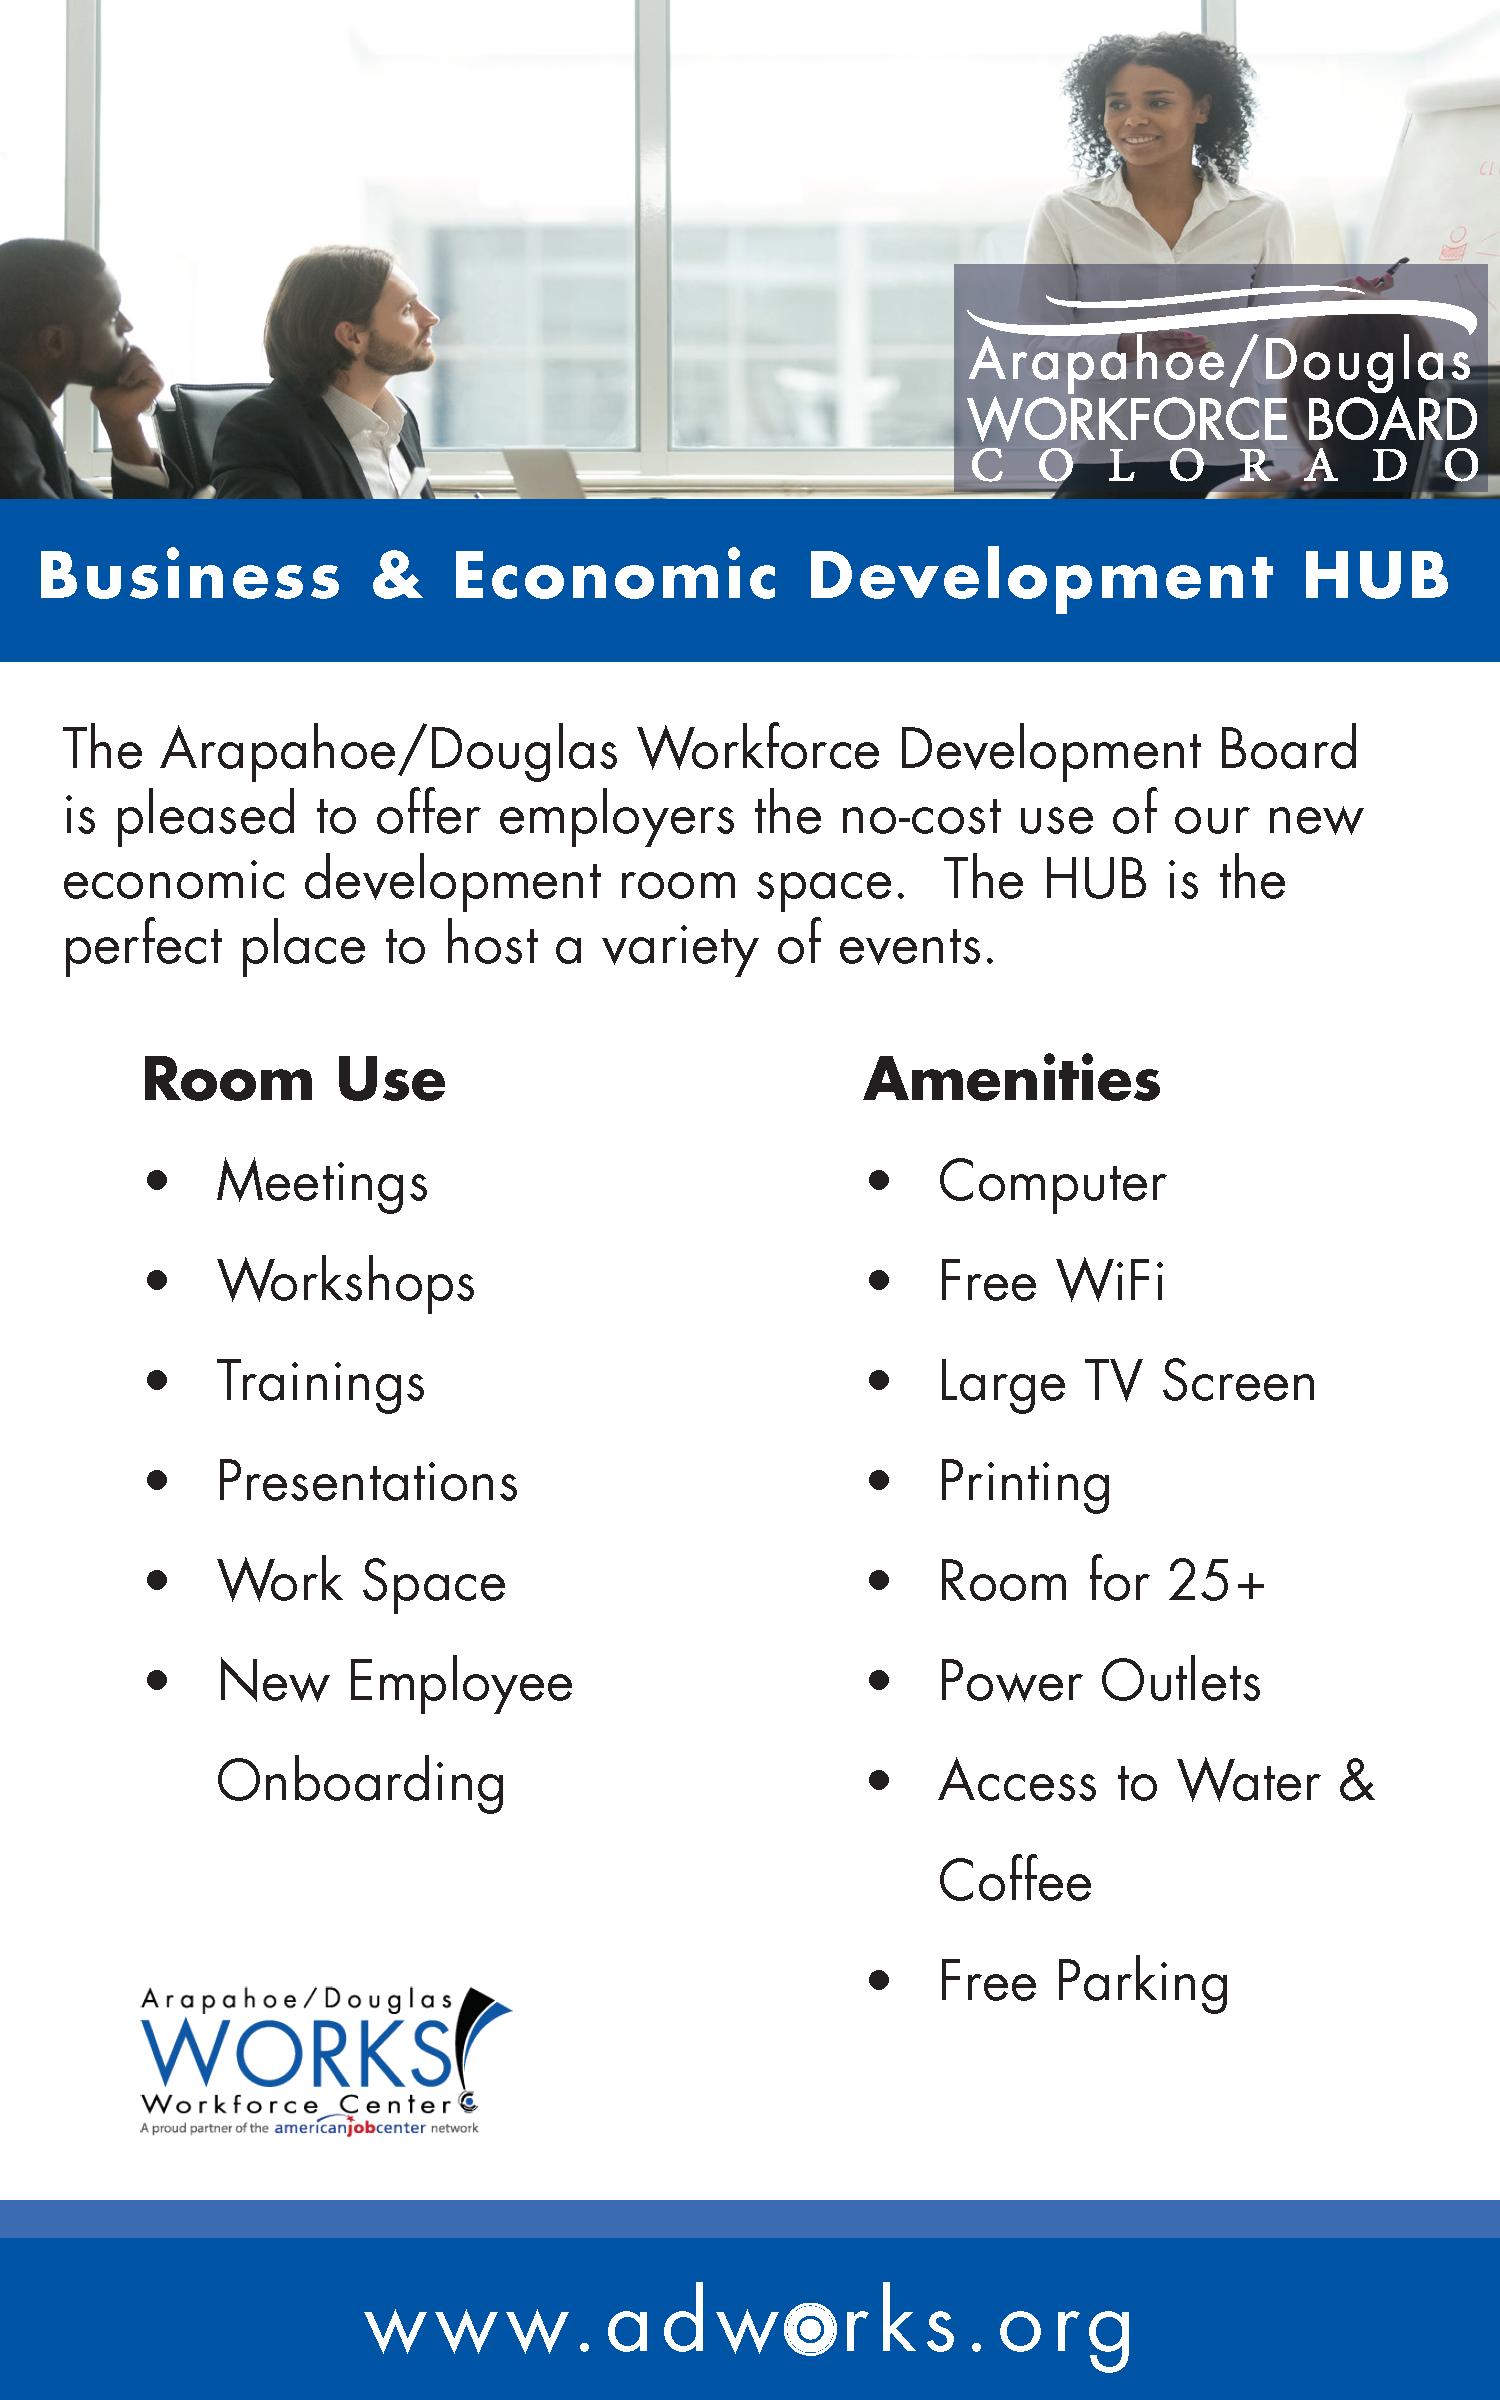 Business & Economic Development HUB